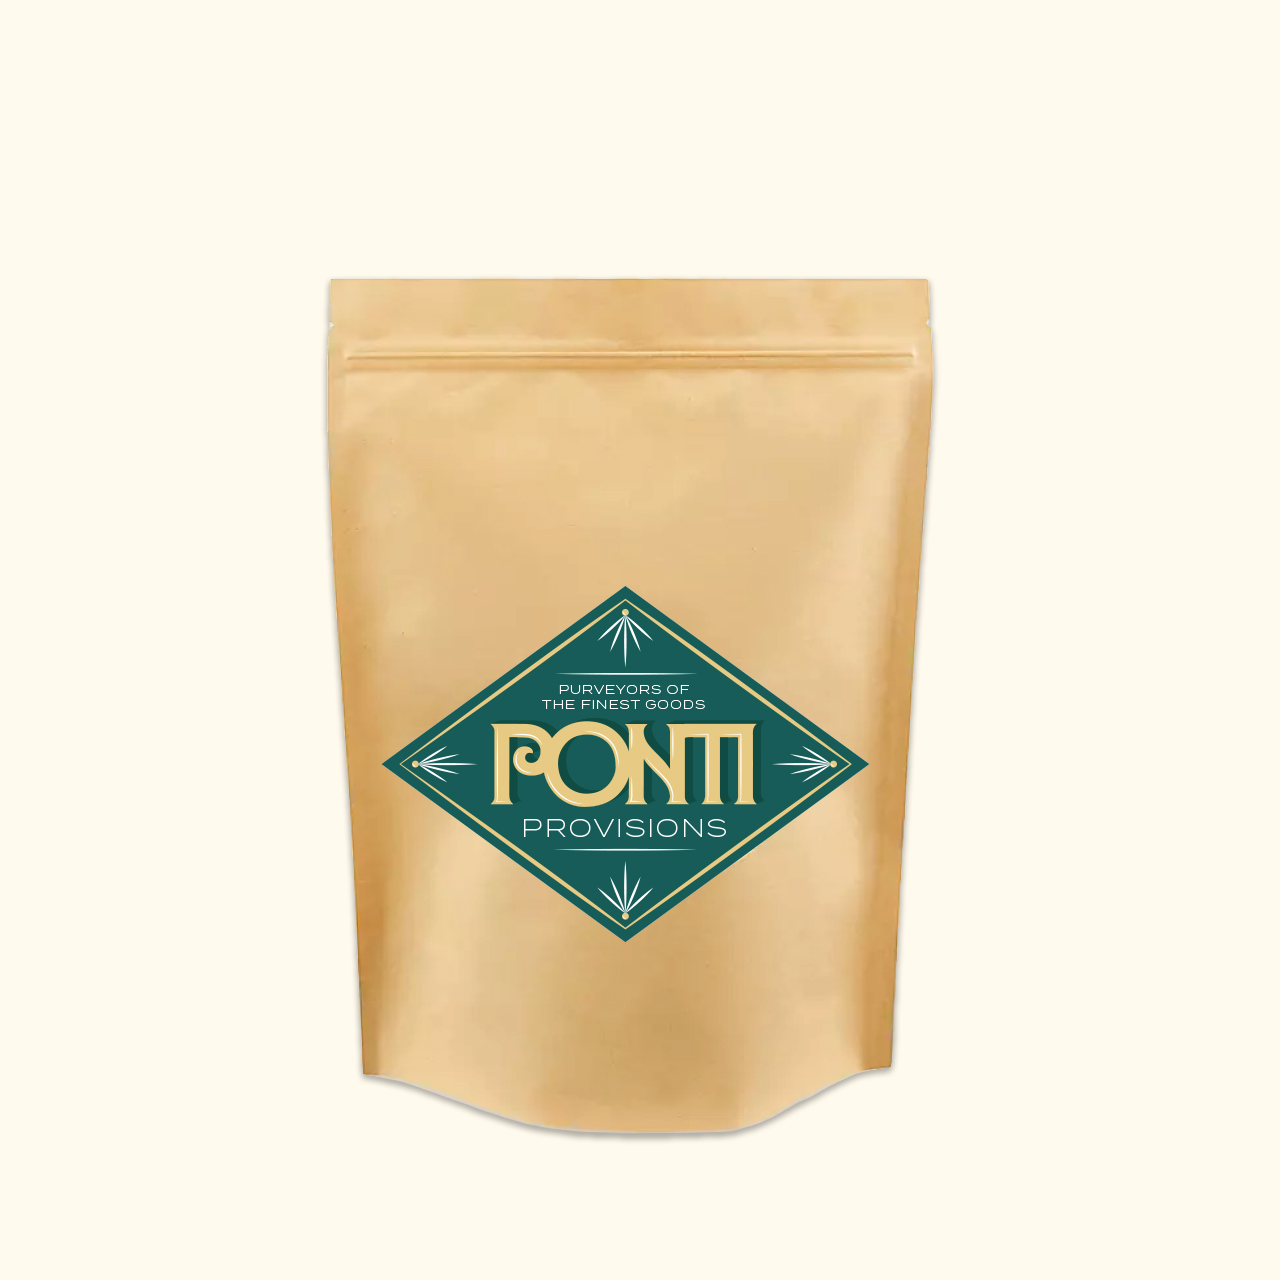 Ponti-brandassets2-1280×1290-1